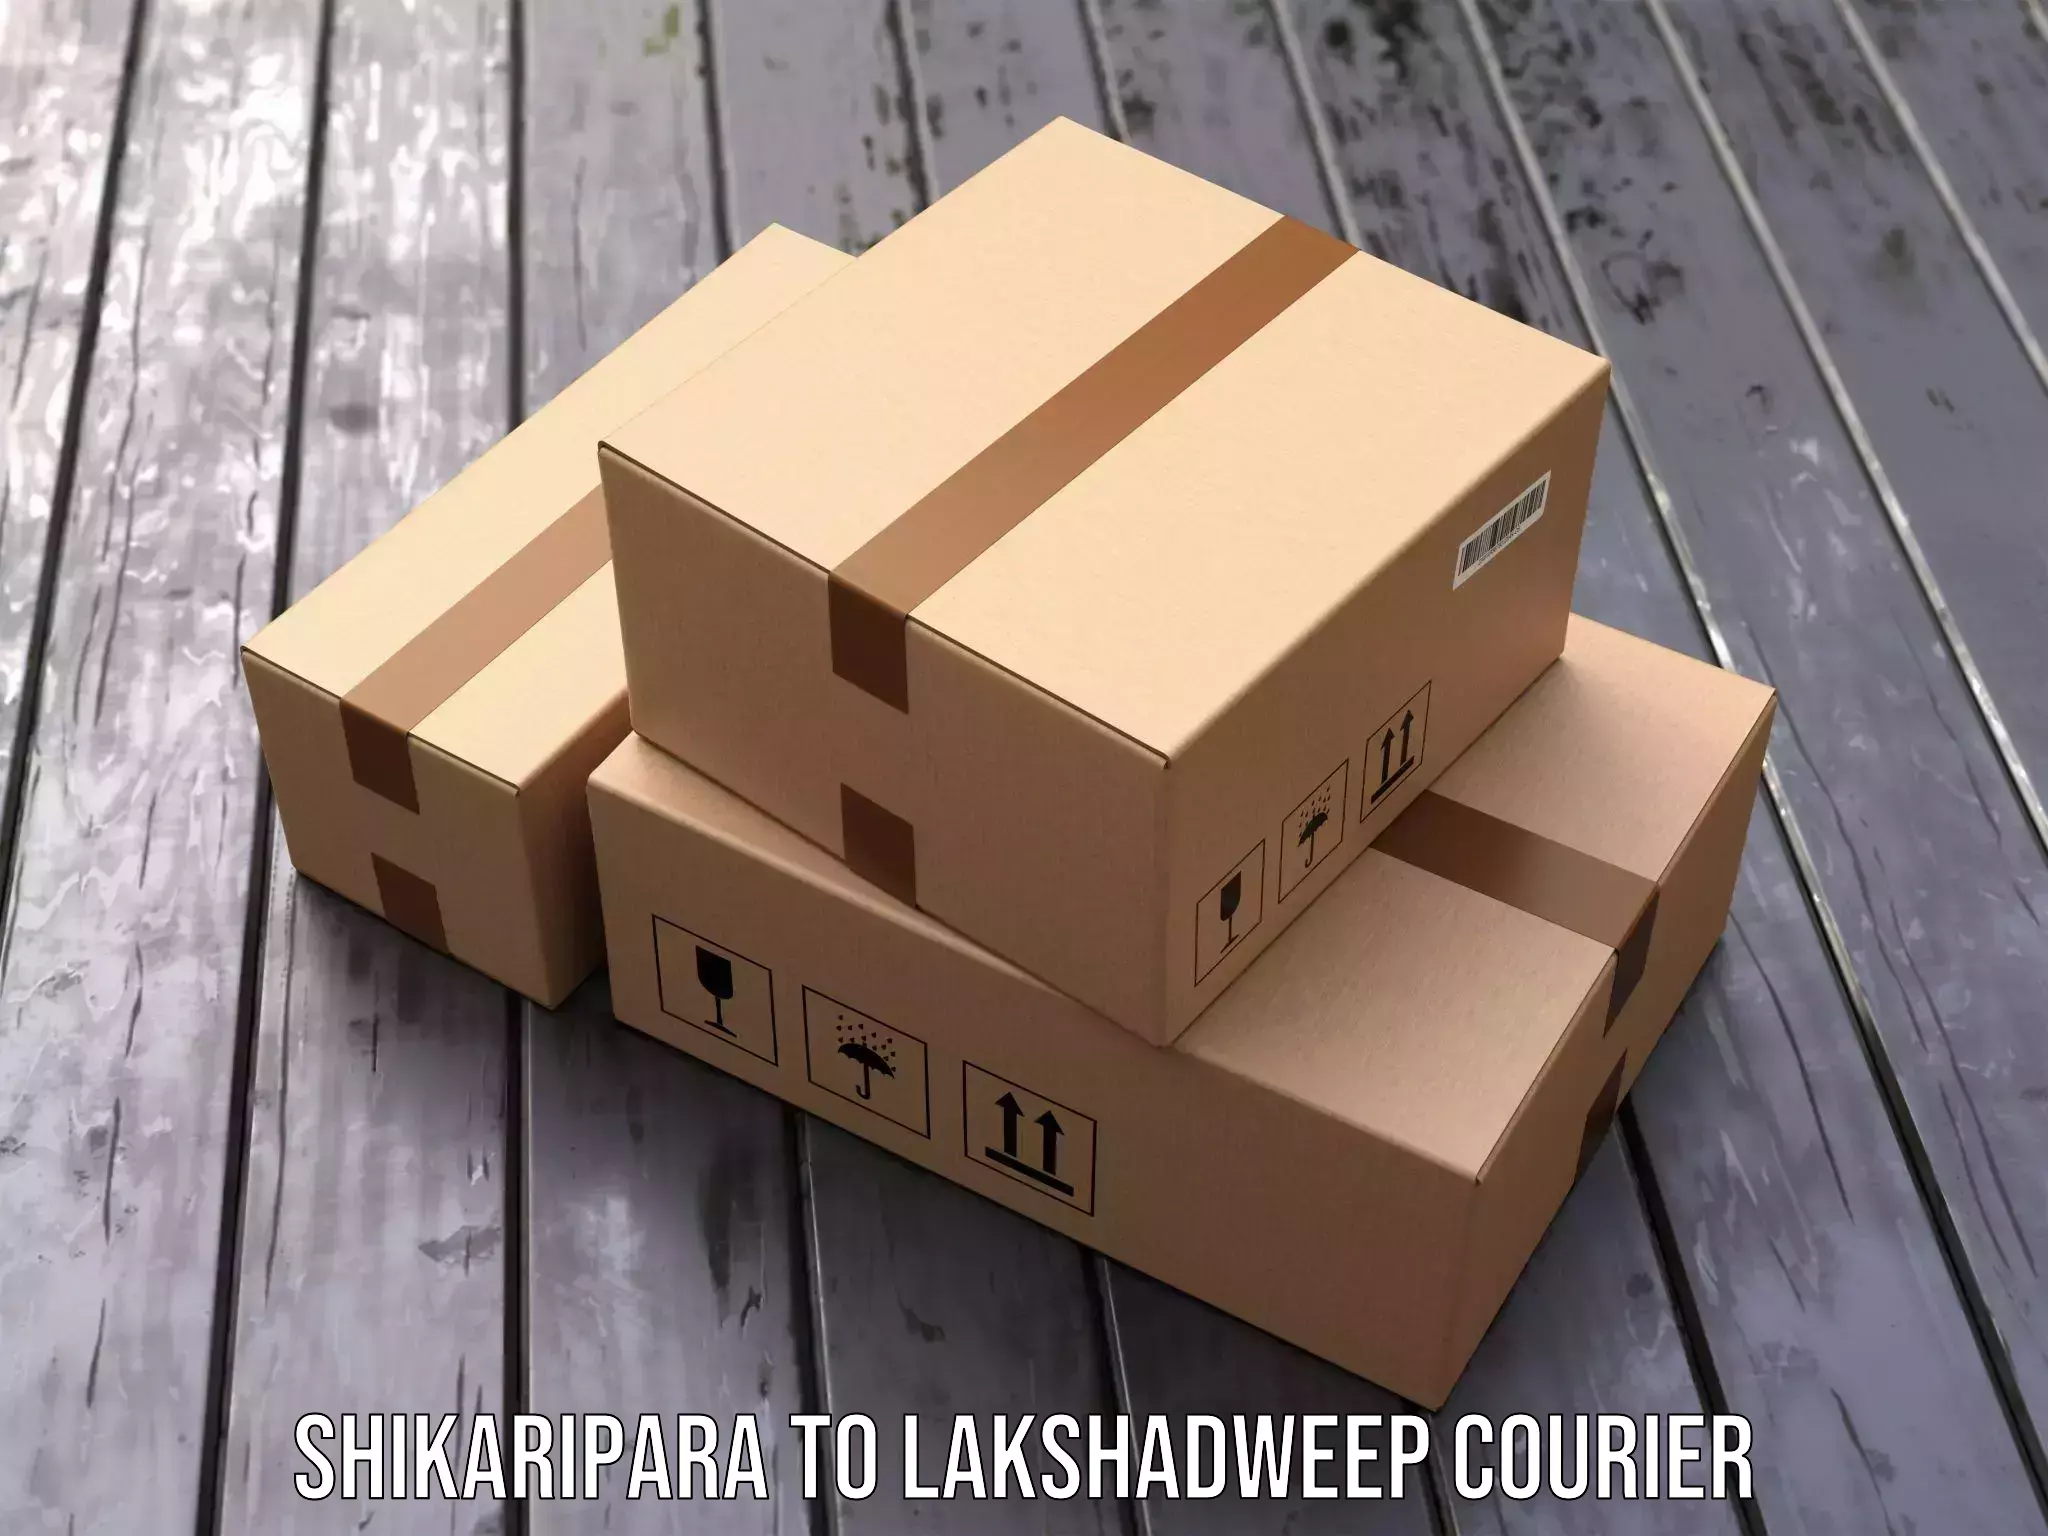 Package delivery network Shikaripara to Lakshadweep